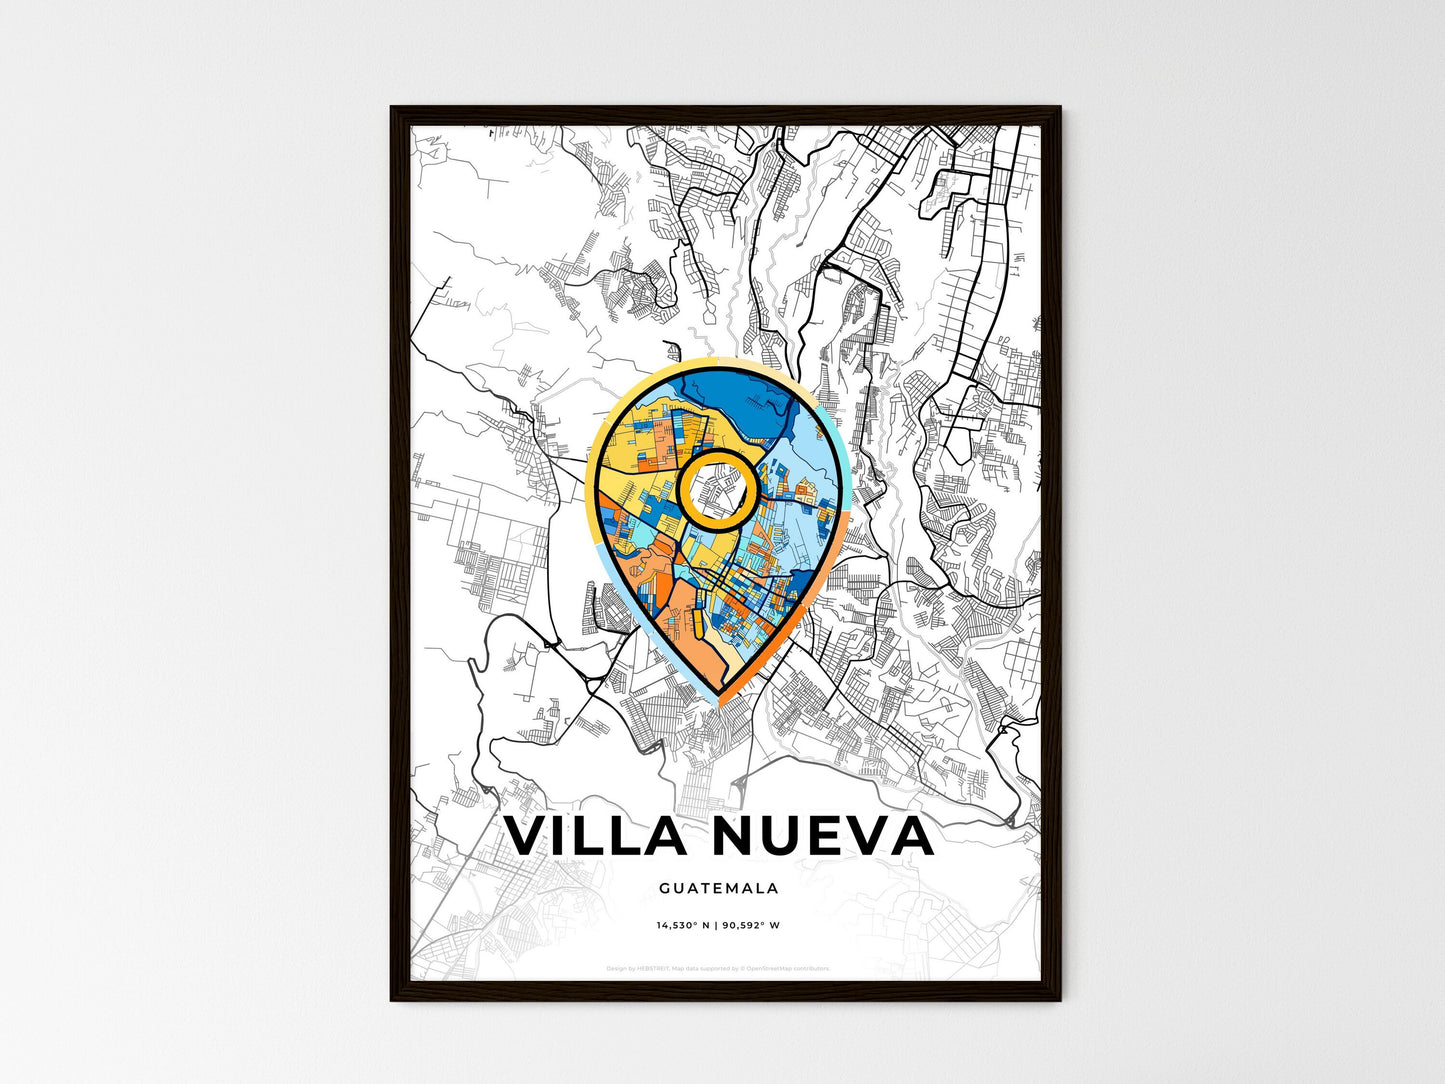 VILLA NUEVA GUATEMALA minimal art map with a colorful icon. Style 1